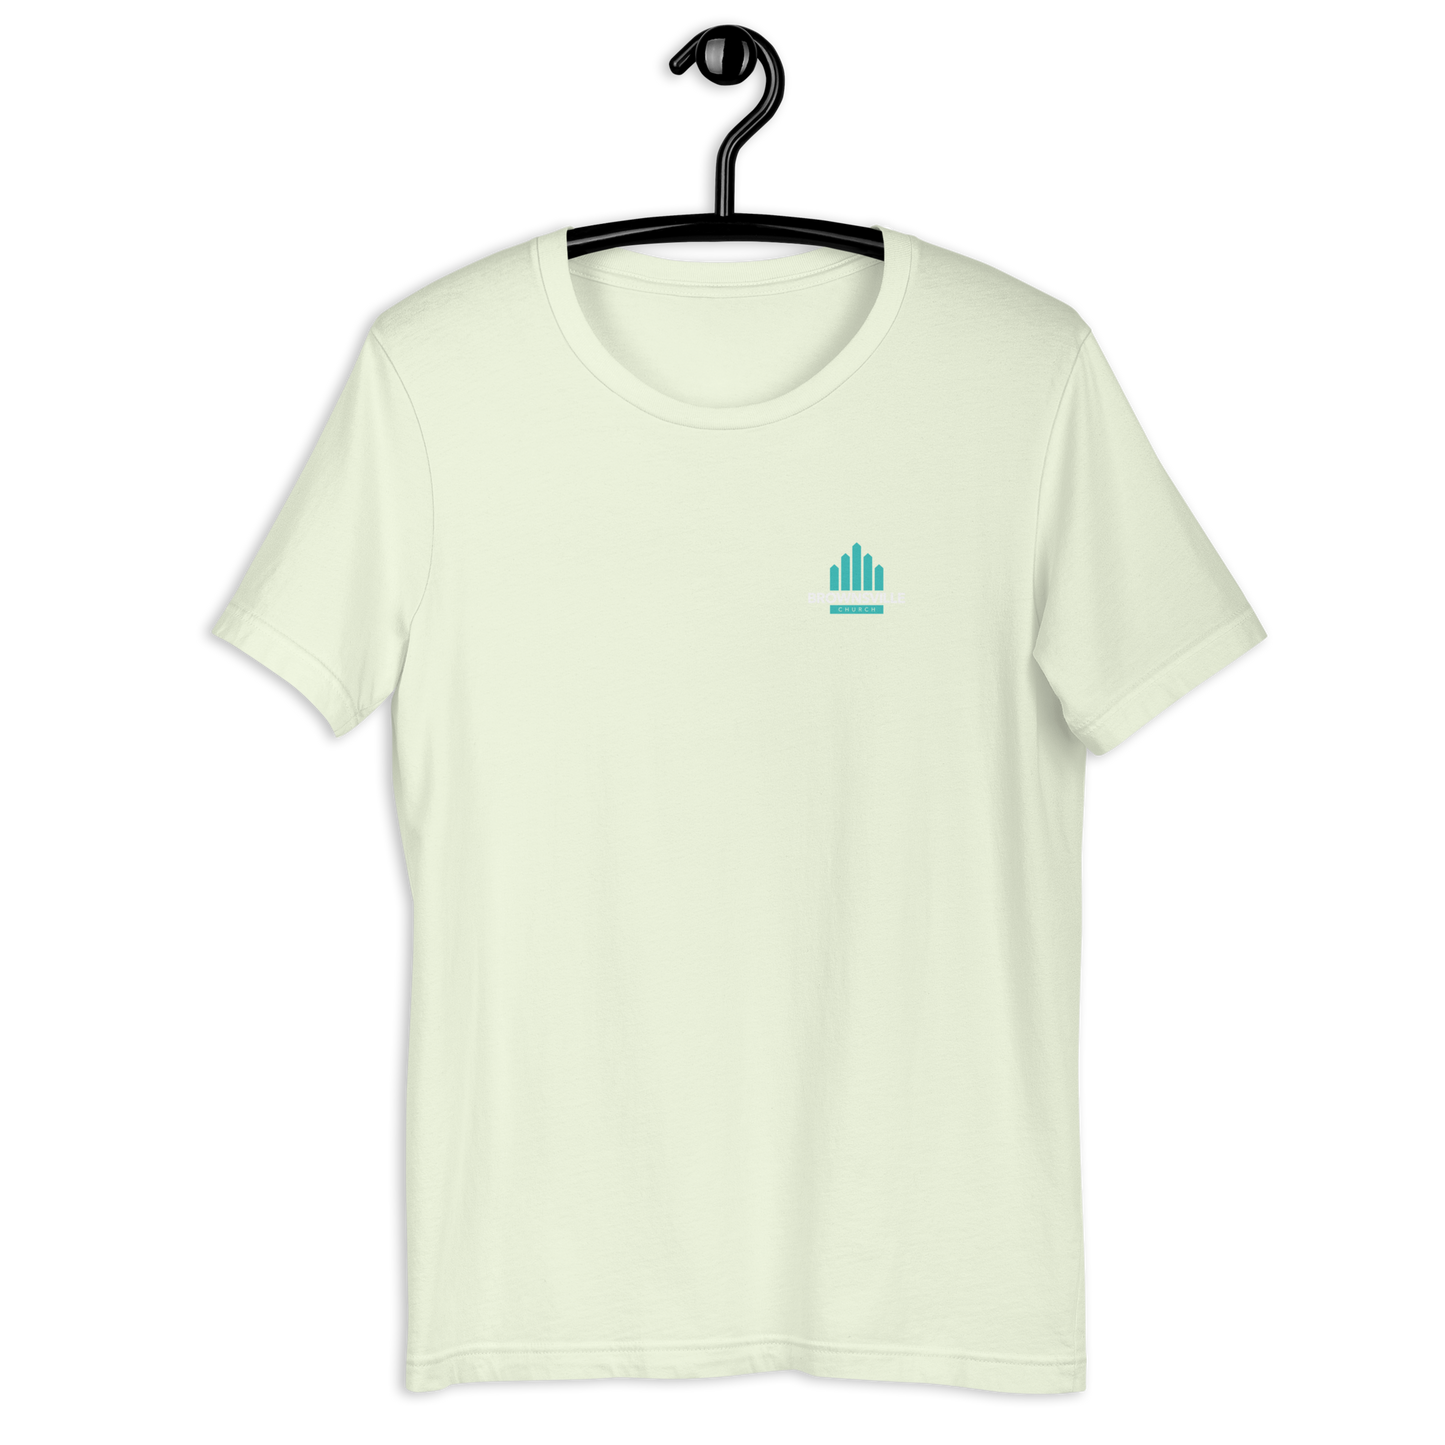 Brownsville Logo (Left Chest) - Short-Sleeve Unisex T-Shirt